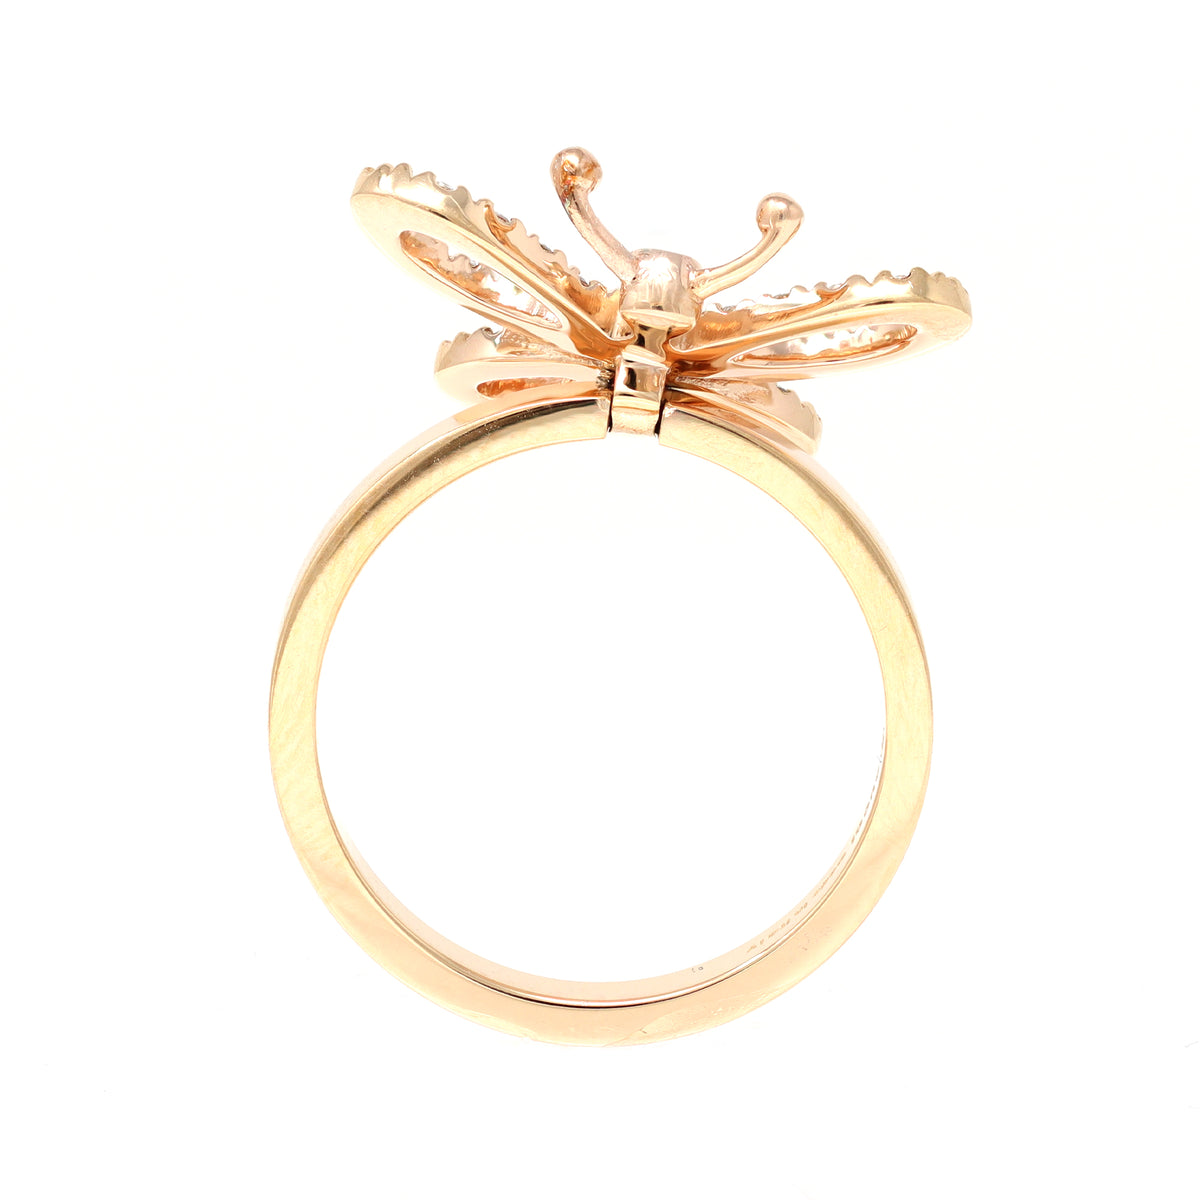 Gucci Flora Farfalla 18k Rose Gold Ring back view